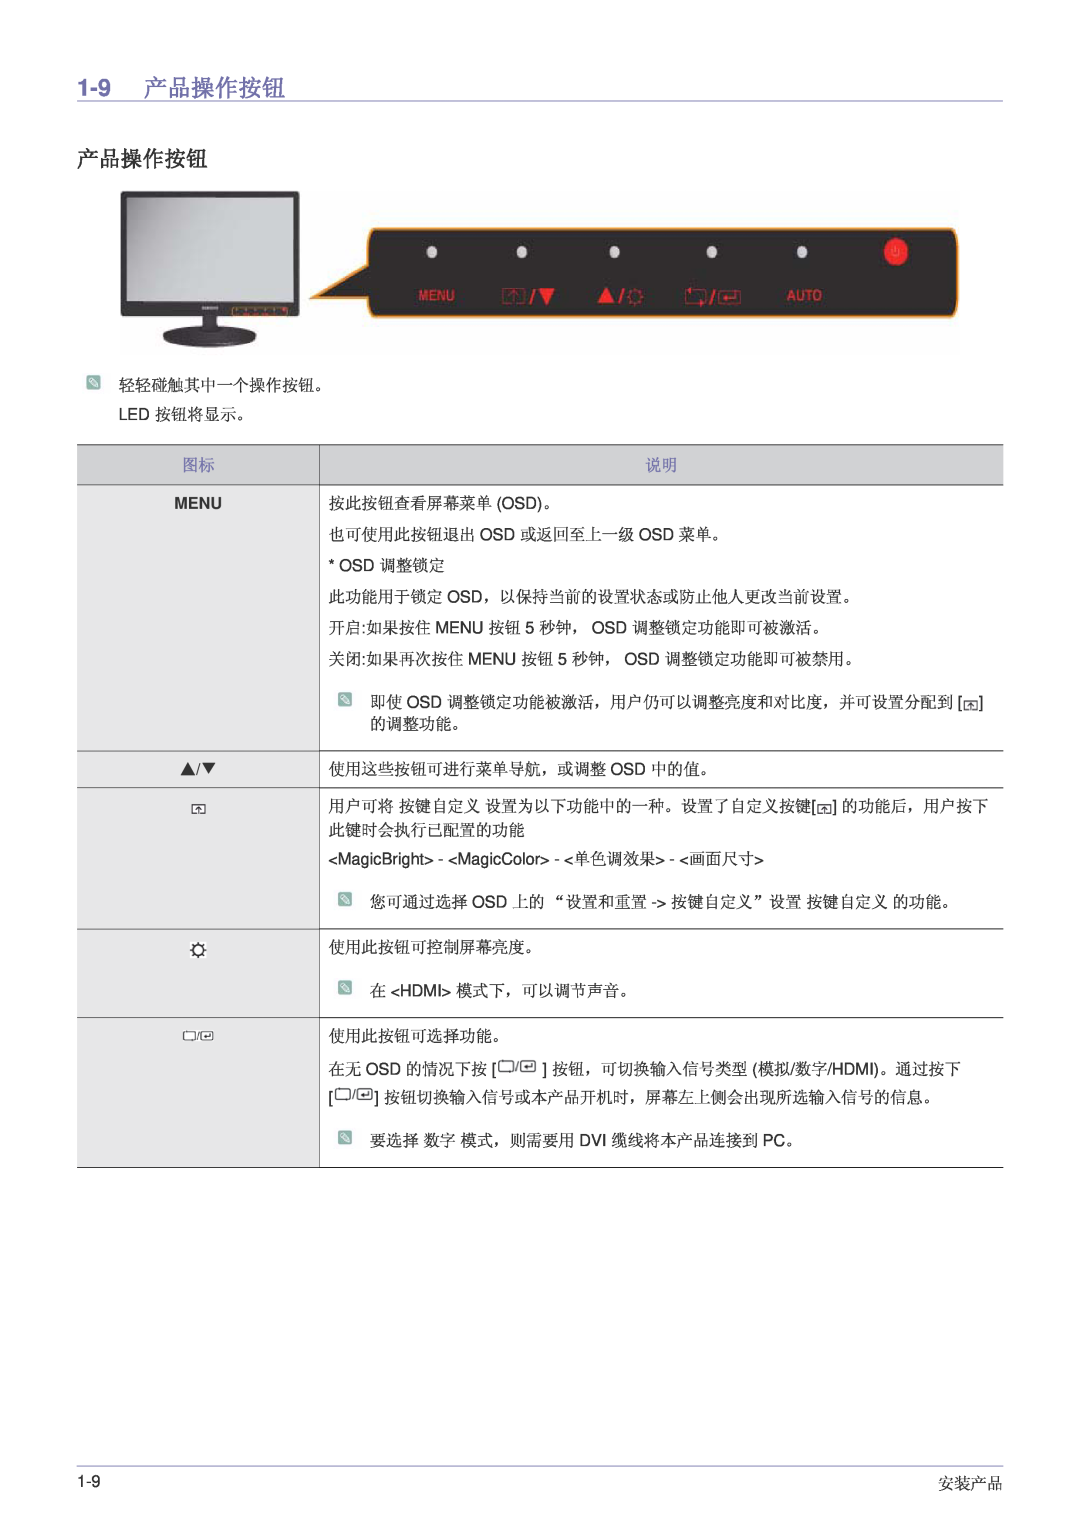 Samsung LS24LRZKUV/EN 1-9 产品操作按钮, 轻轻碰触其中一个操作按钮。 Led 按钮将显示。, Menu, 按此按钮查看屏幕菜单 Osd。, 也可使用此按钮退出 Osd 或返回至上一级 Osd 菜单。, Osd 调整锁定 